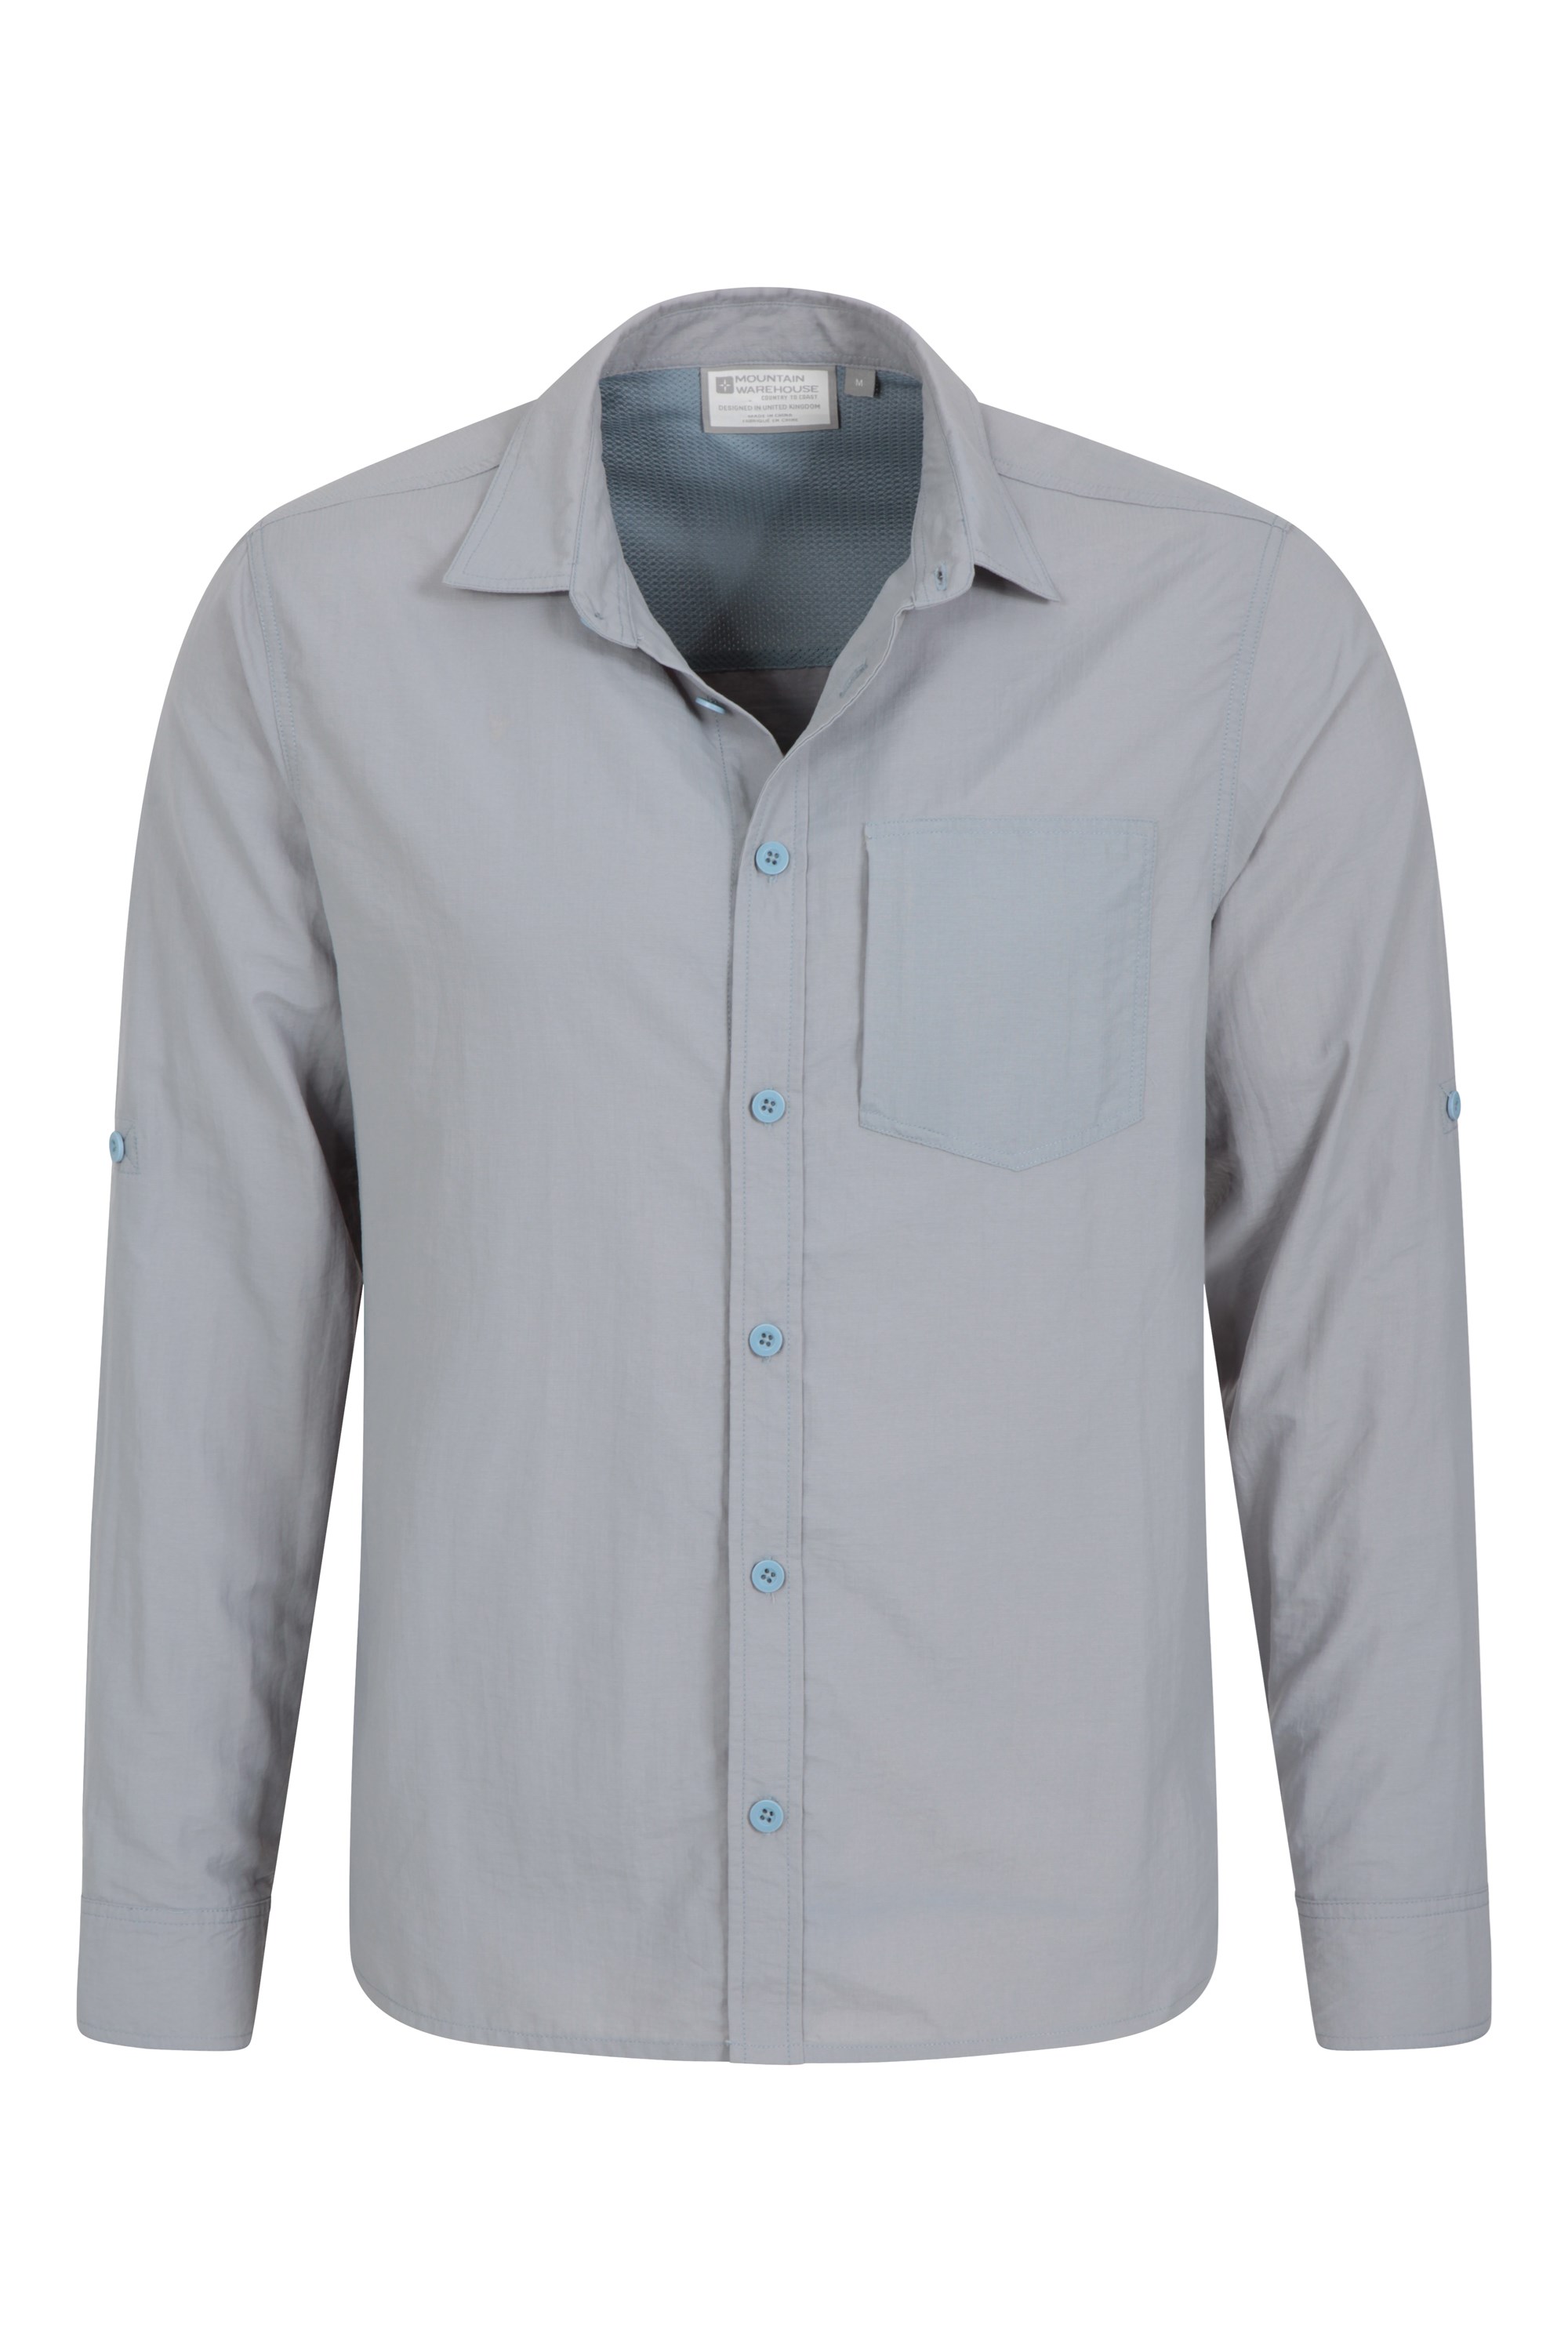 Navigator Convertible Mens Long-Sleeve Shirt - Mountain Warehouse